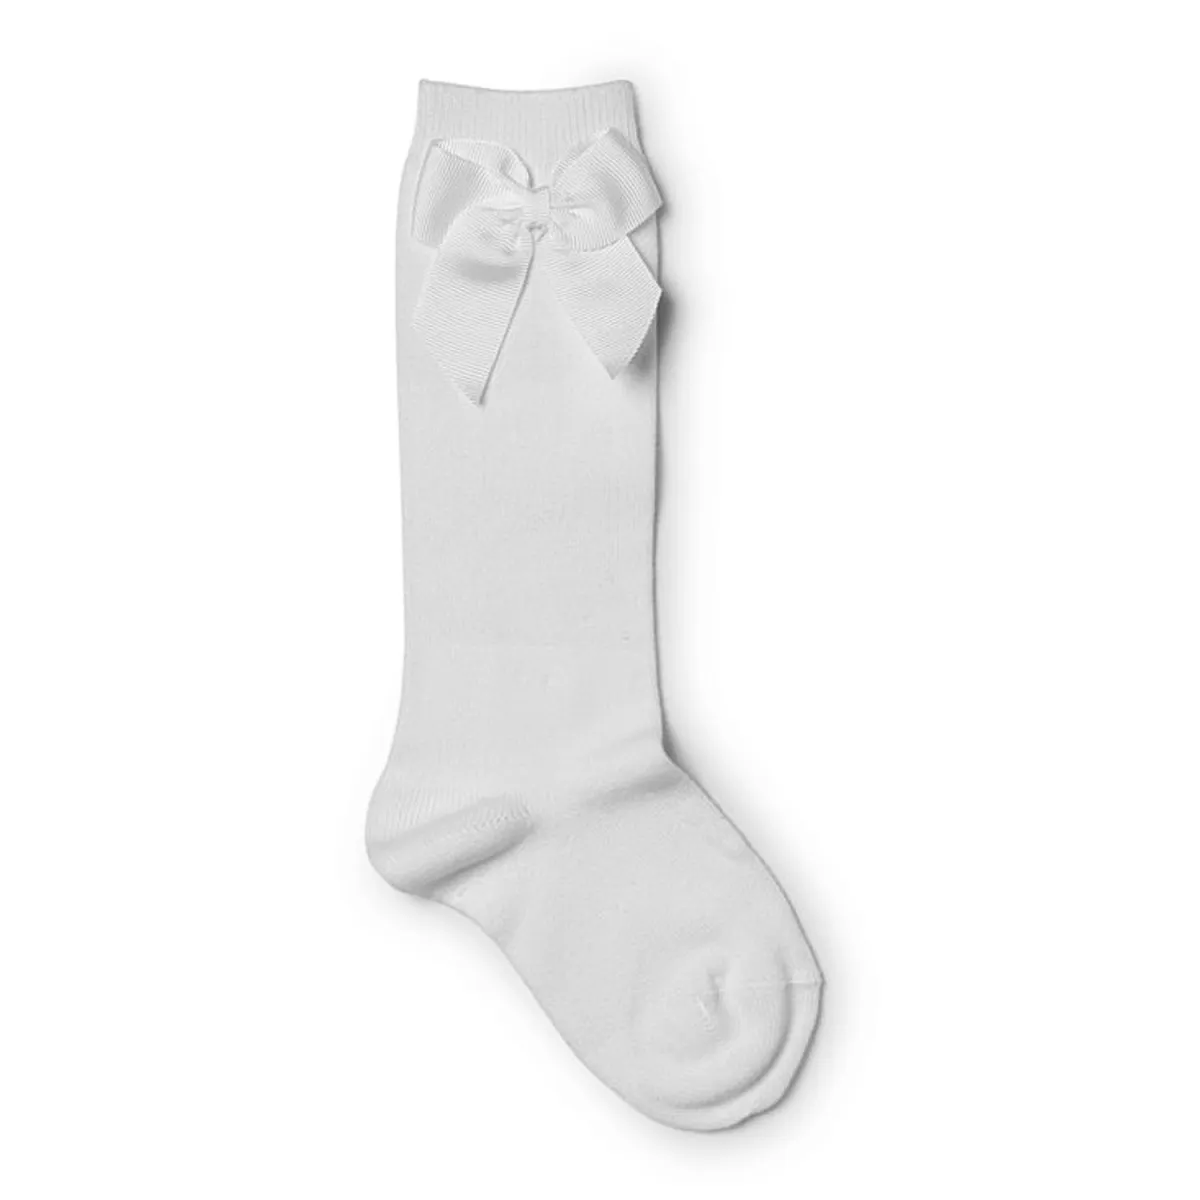 CONDOR - high socks with side bow